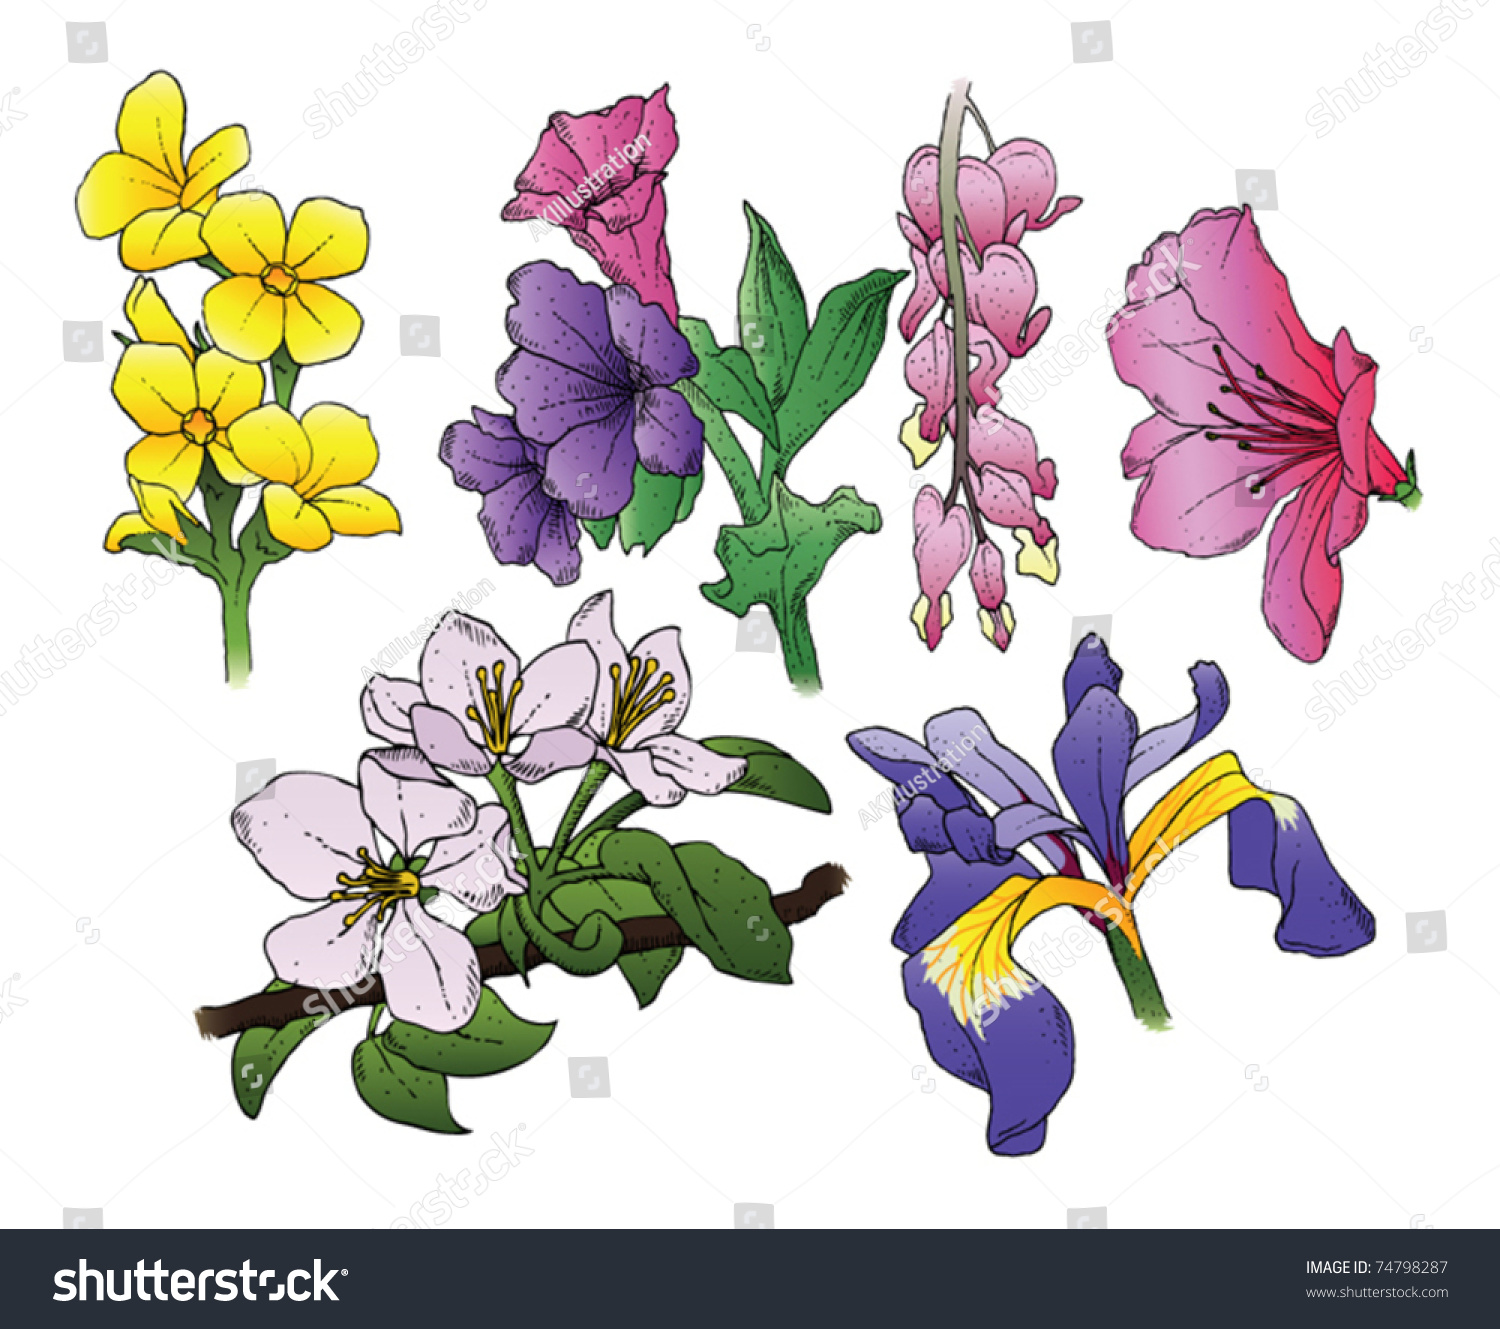 A Set Of 6 Hand-Drawn Flowers. Vector. - 74798287 : Shutterstock